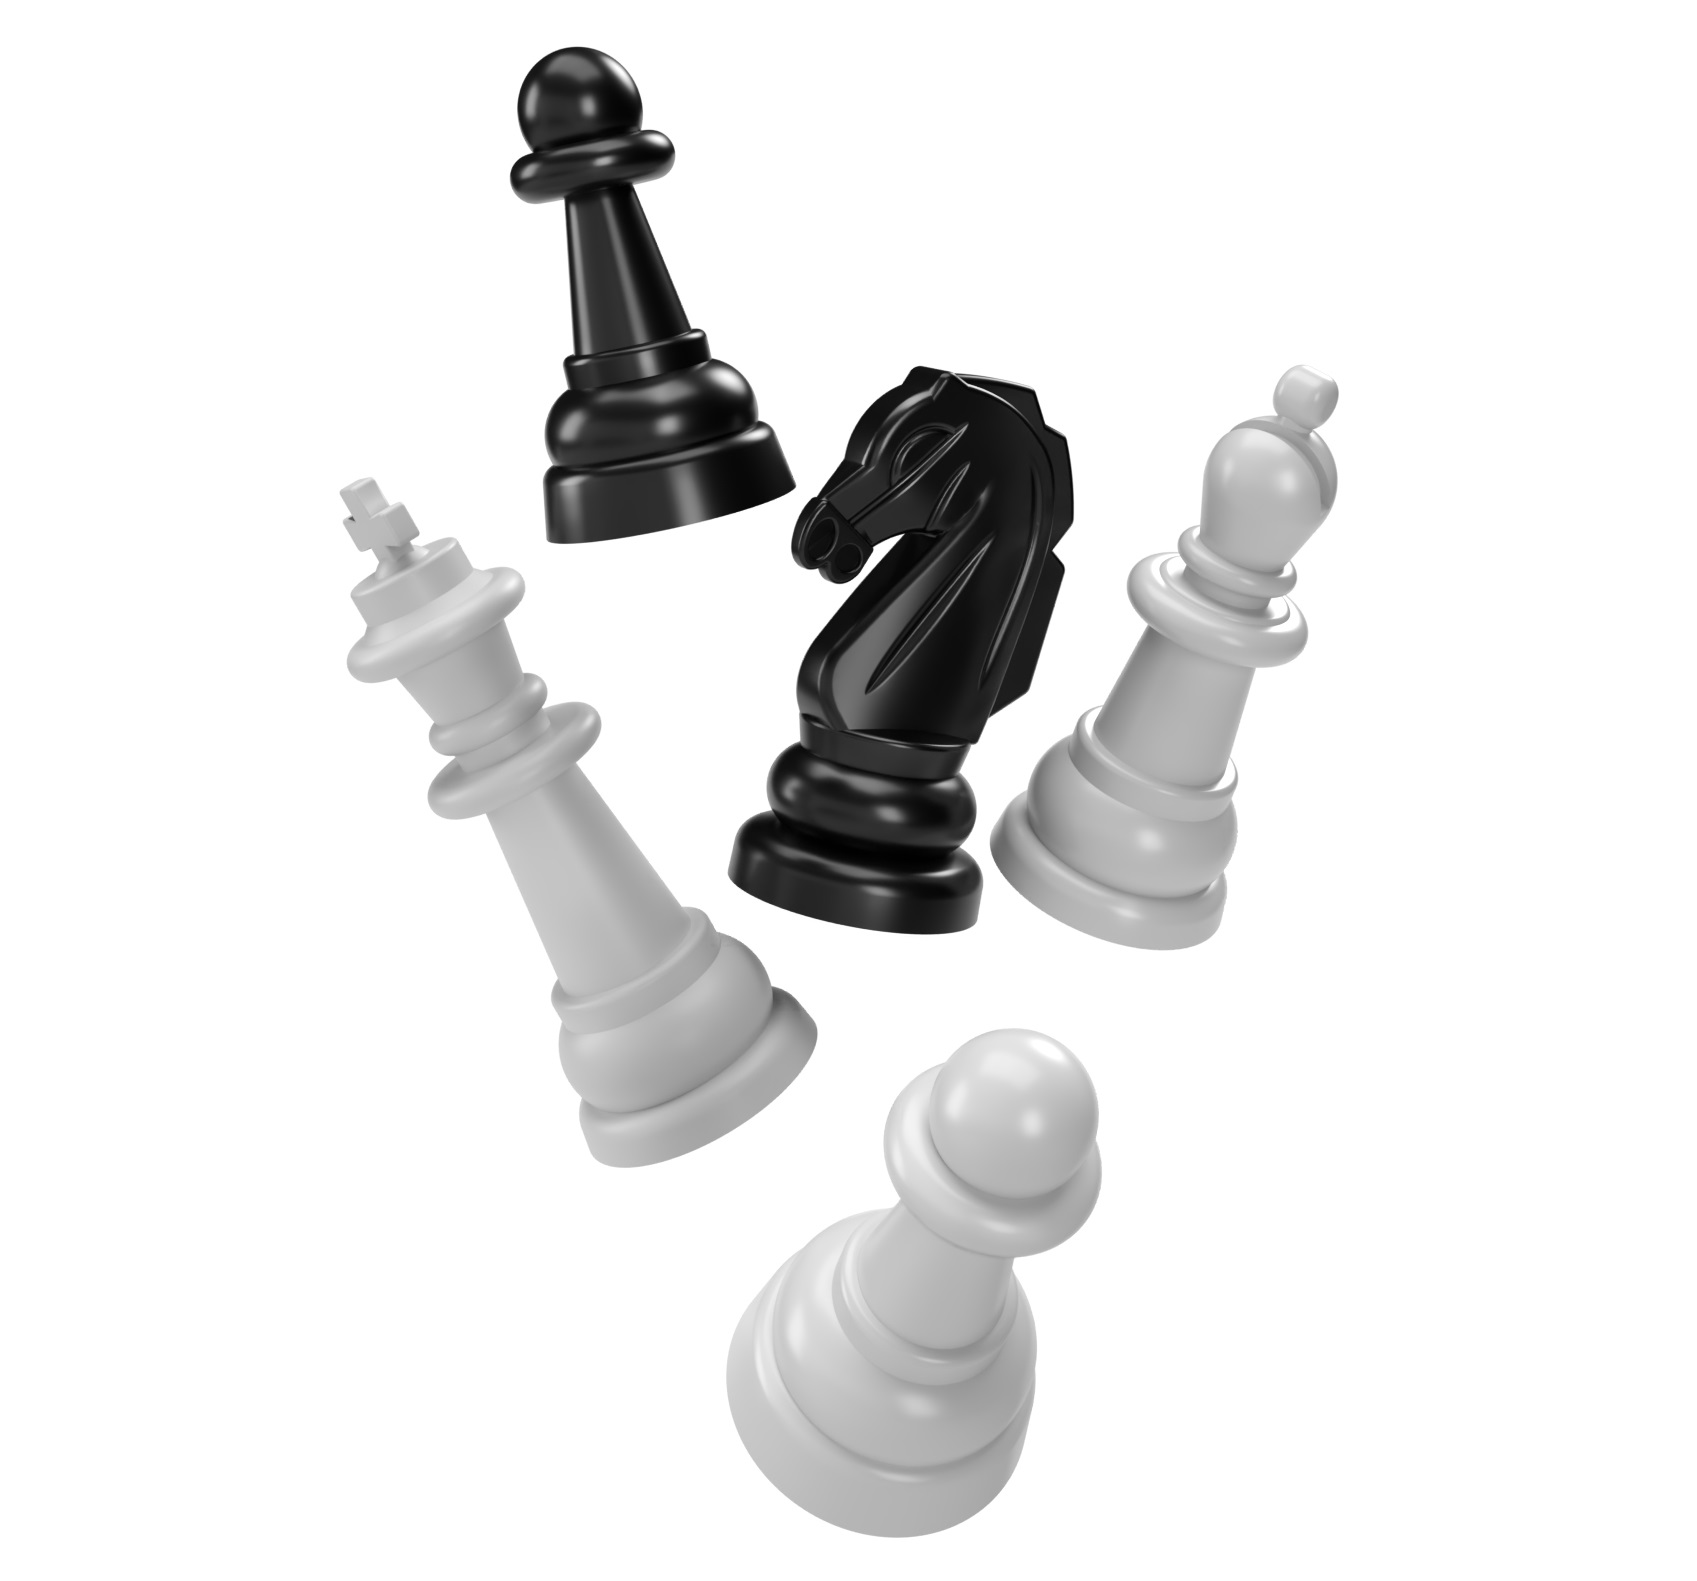 Игра настольная - Шашки-Шахматы  